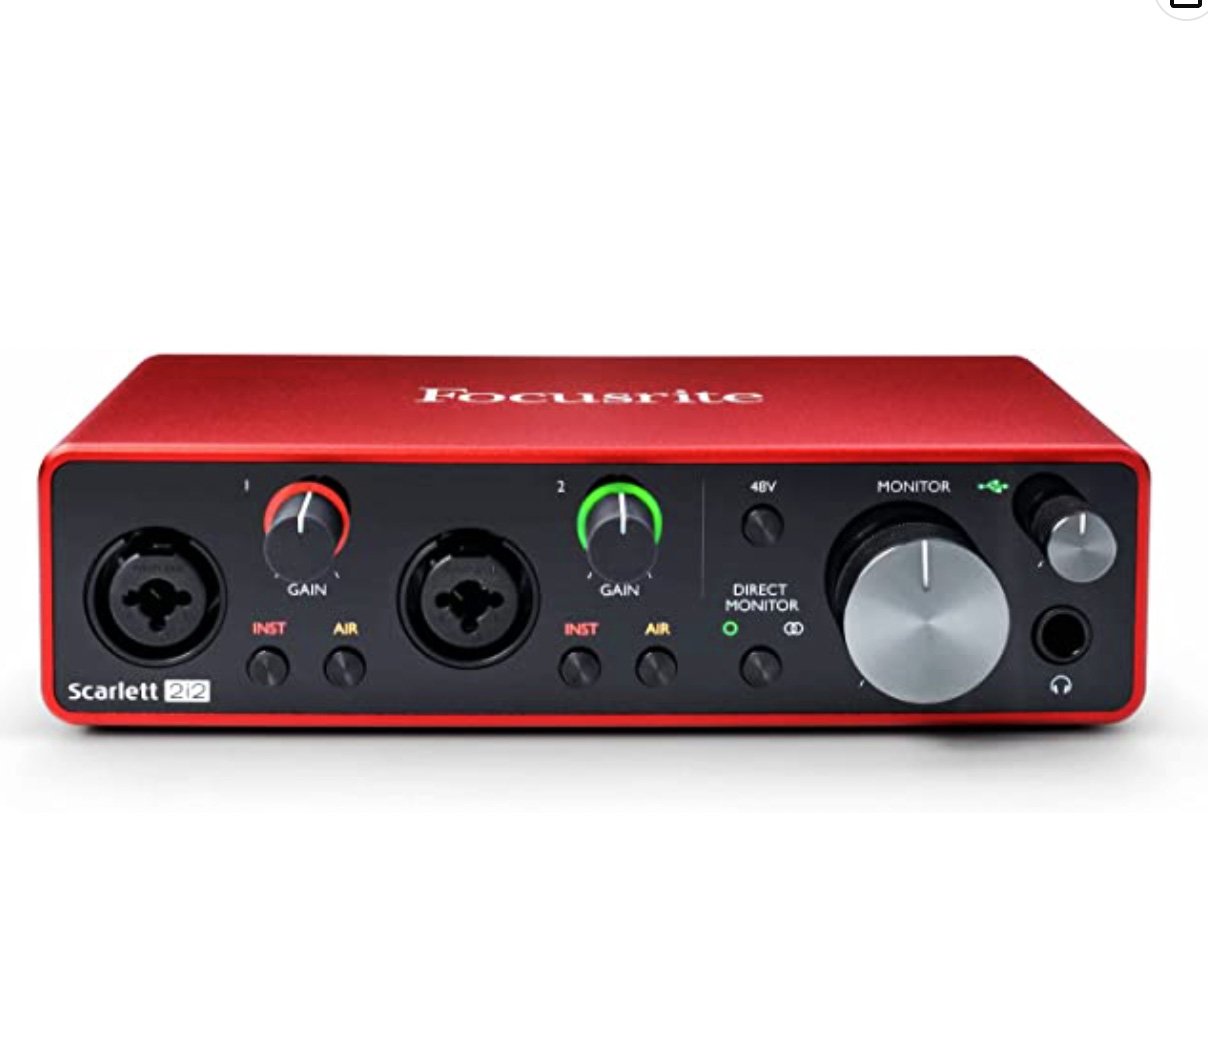 Focusrite Scarlett 2i2 3rd Gen USB Audio Interface for High-Fidelity, Studio Quality Recording